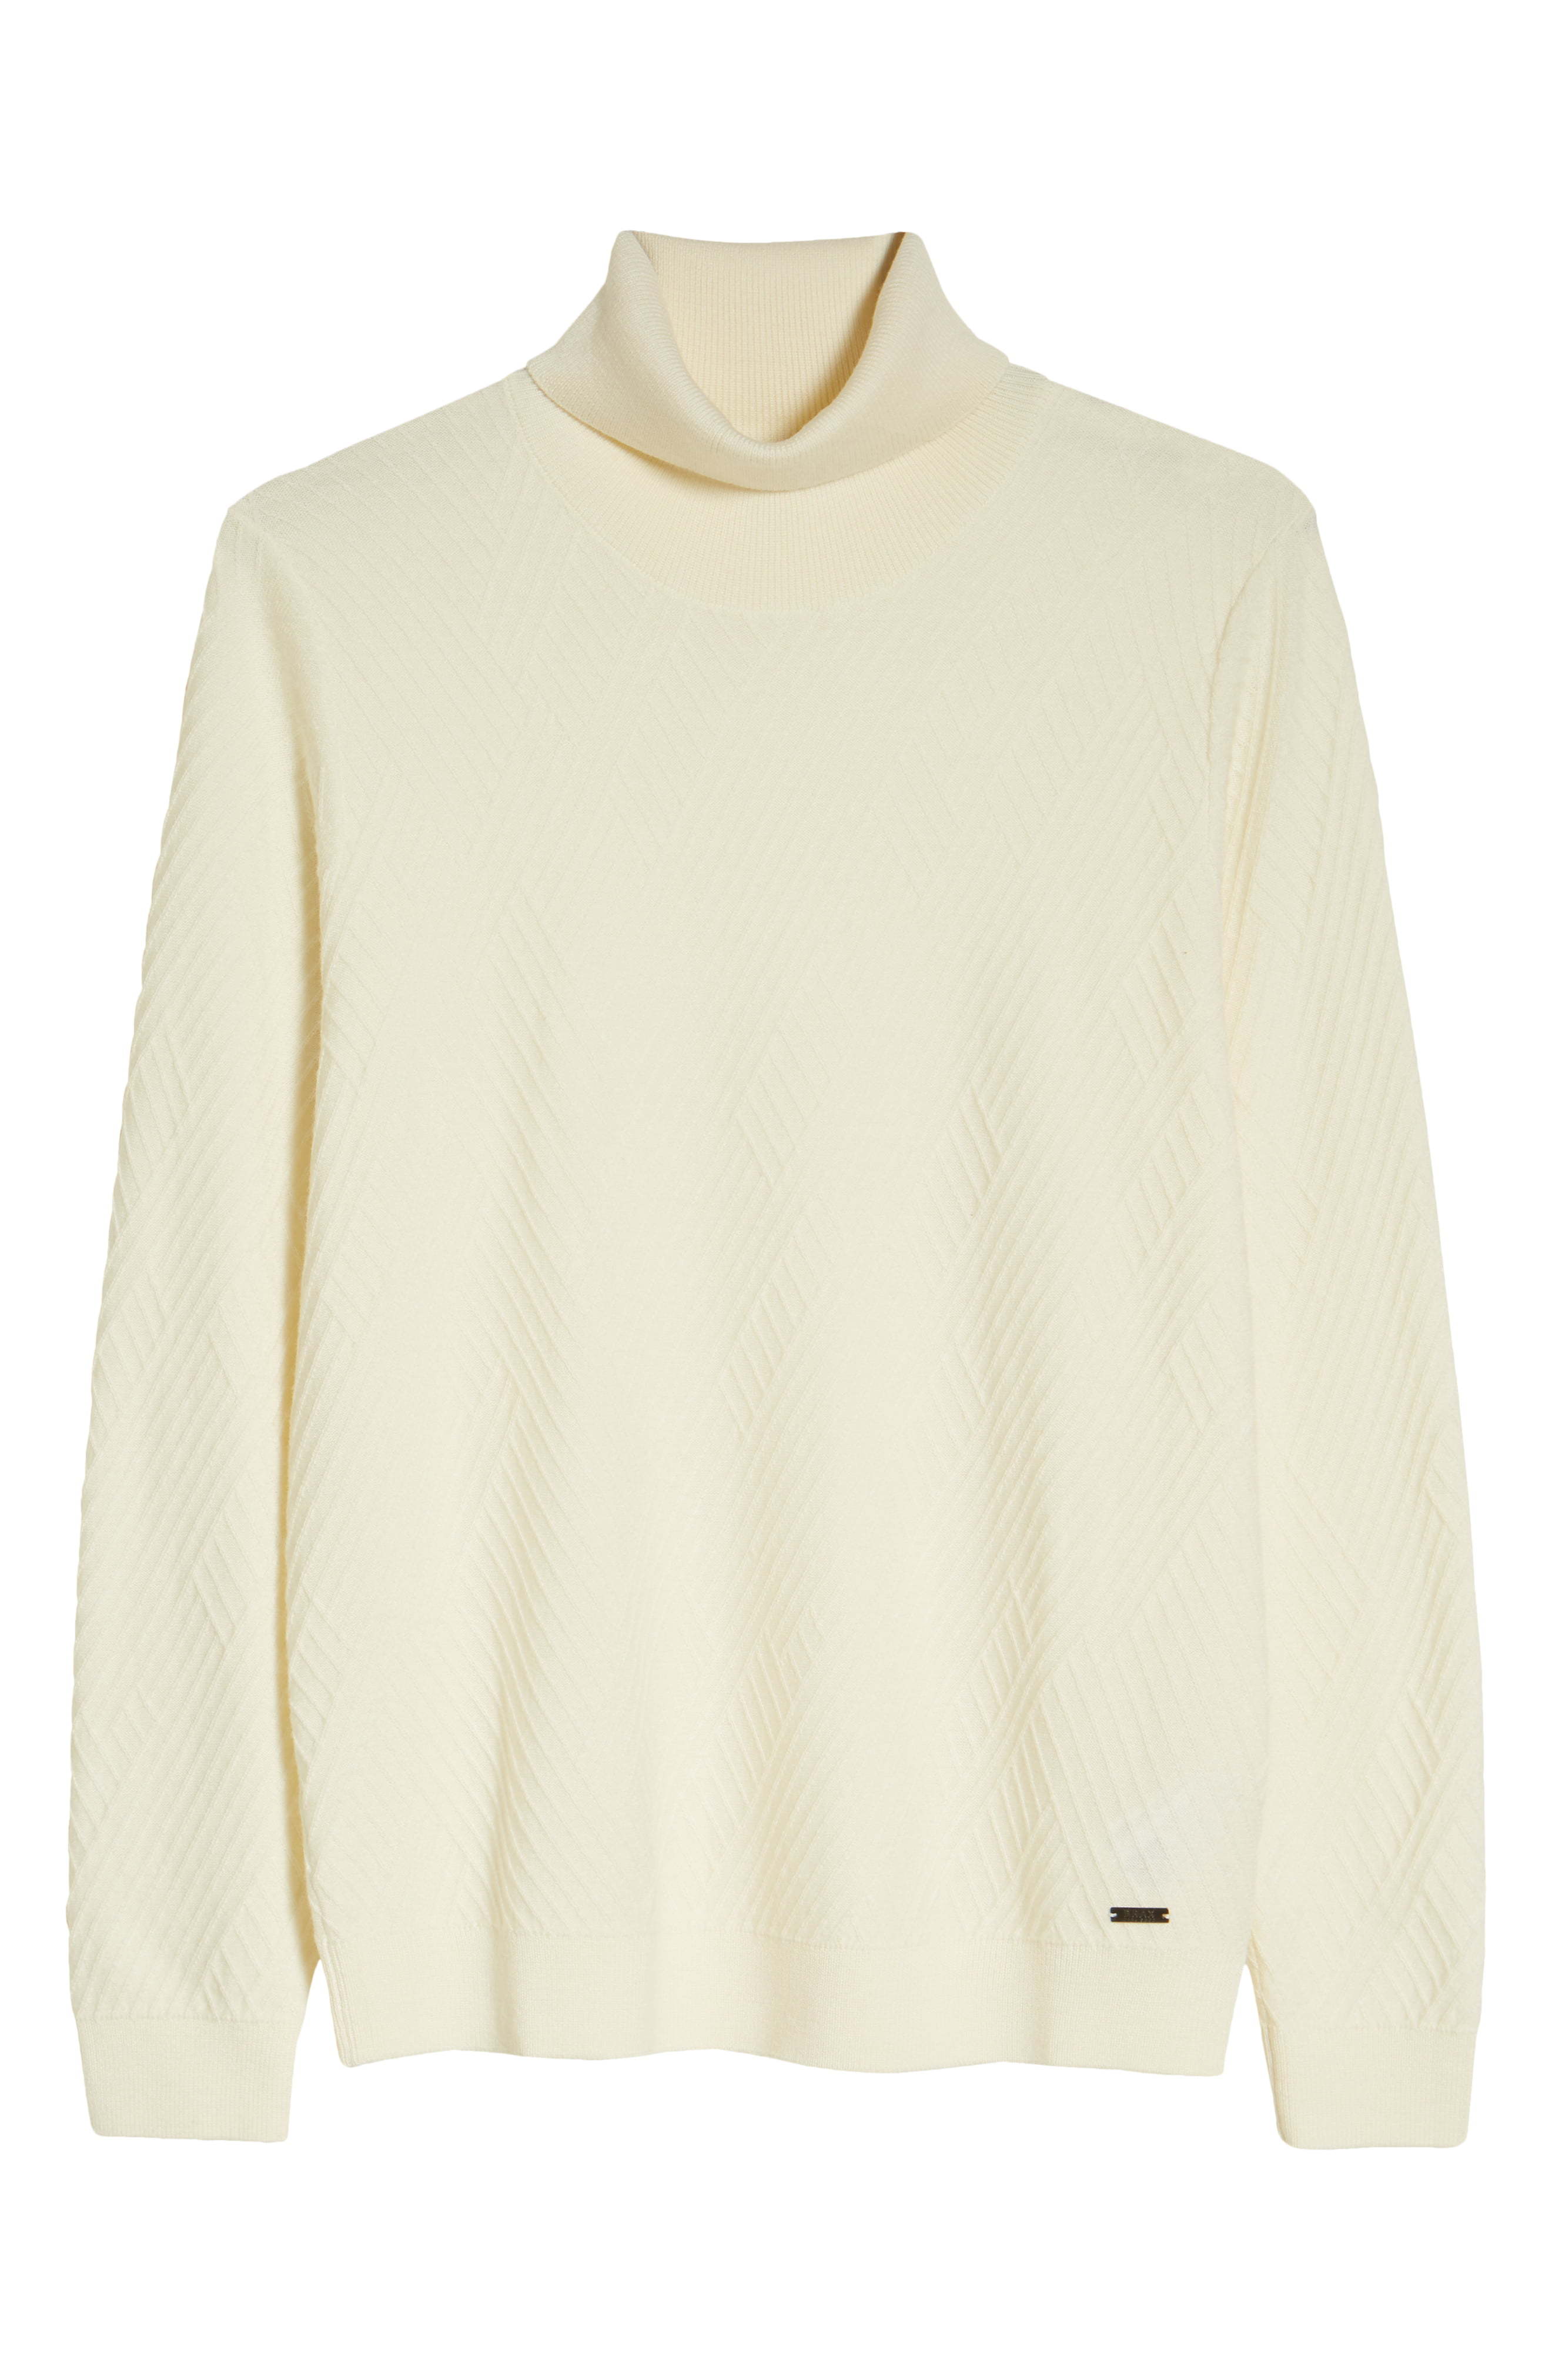 Brax Brian Merino Wool Turtleneck Sweater, $82 | Nordstrom | Lookastic